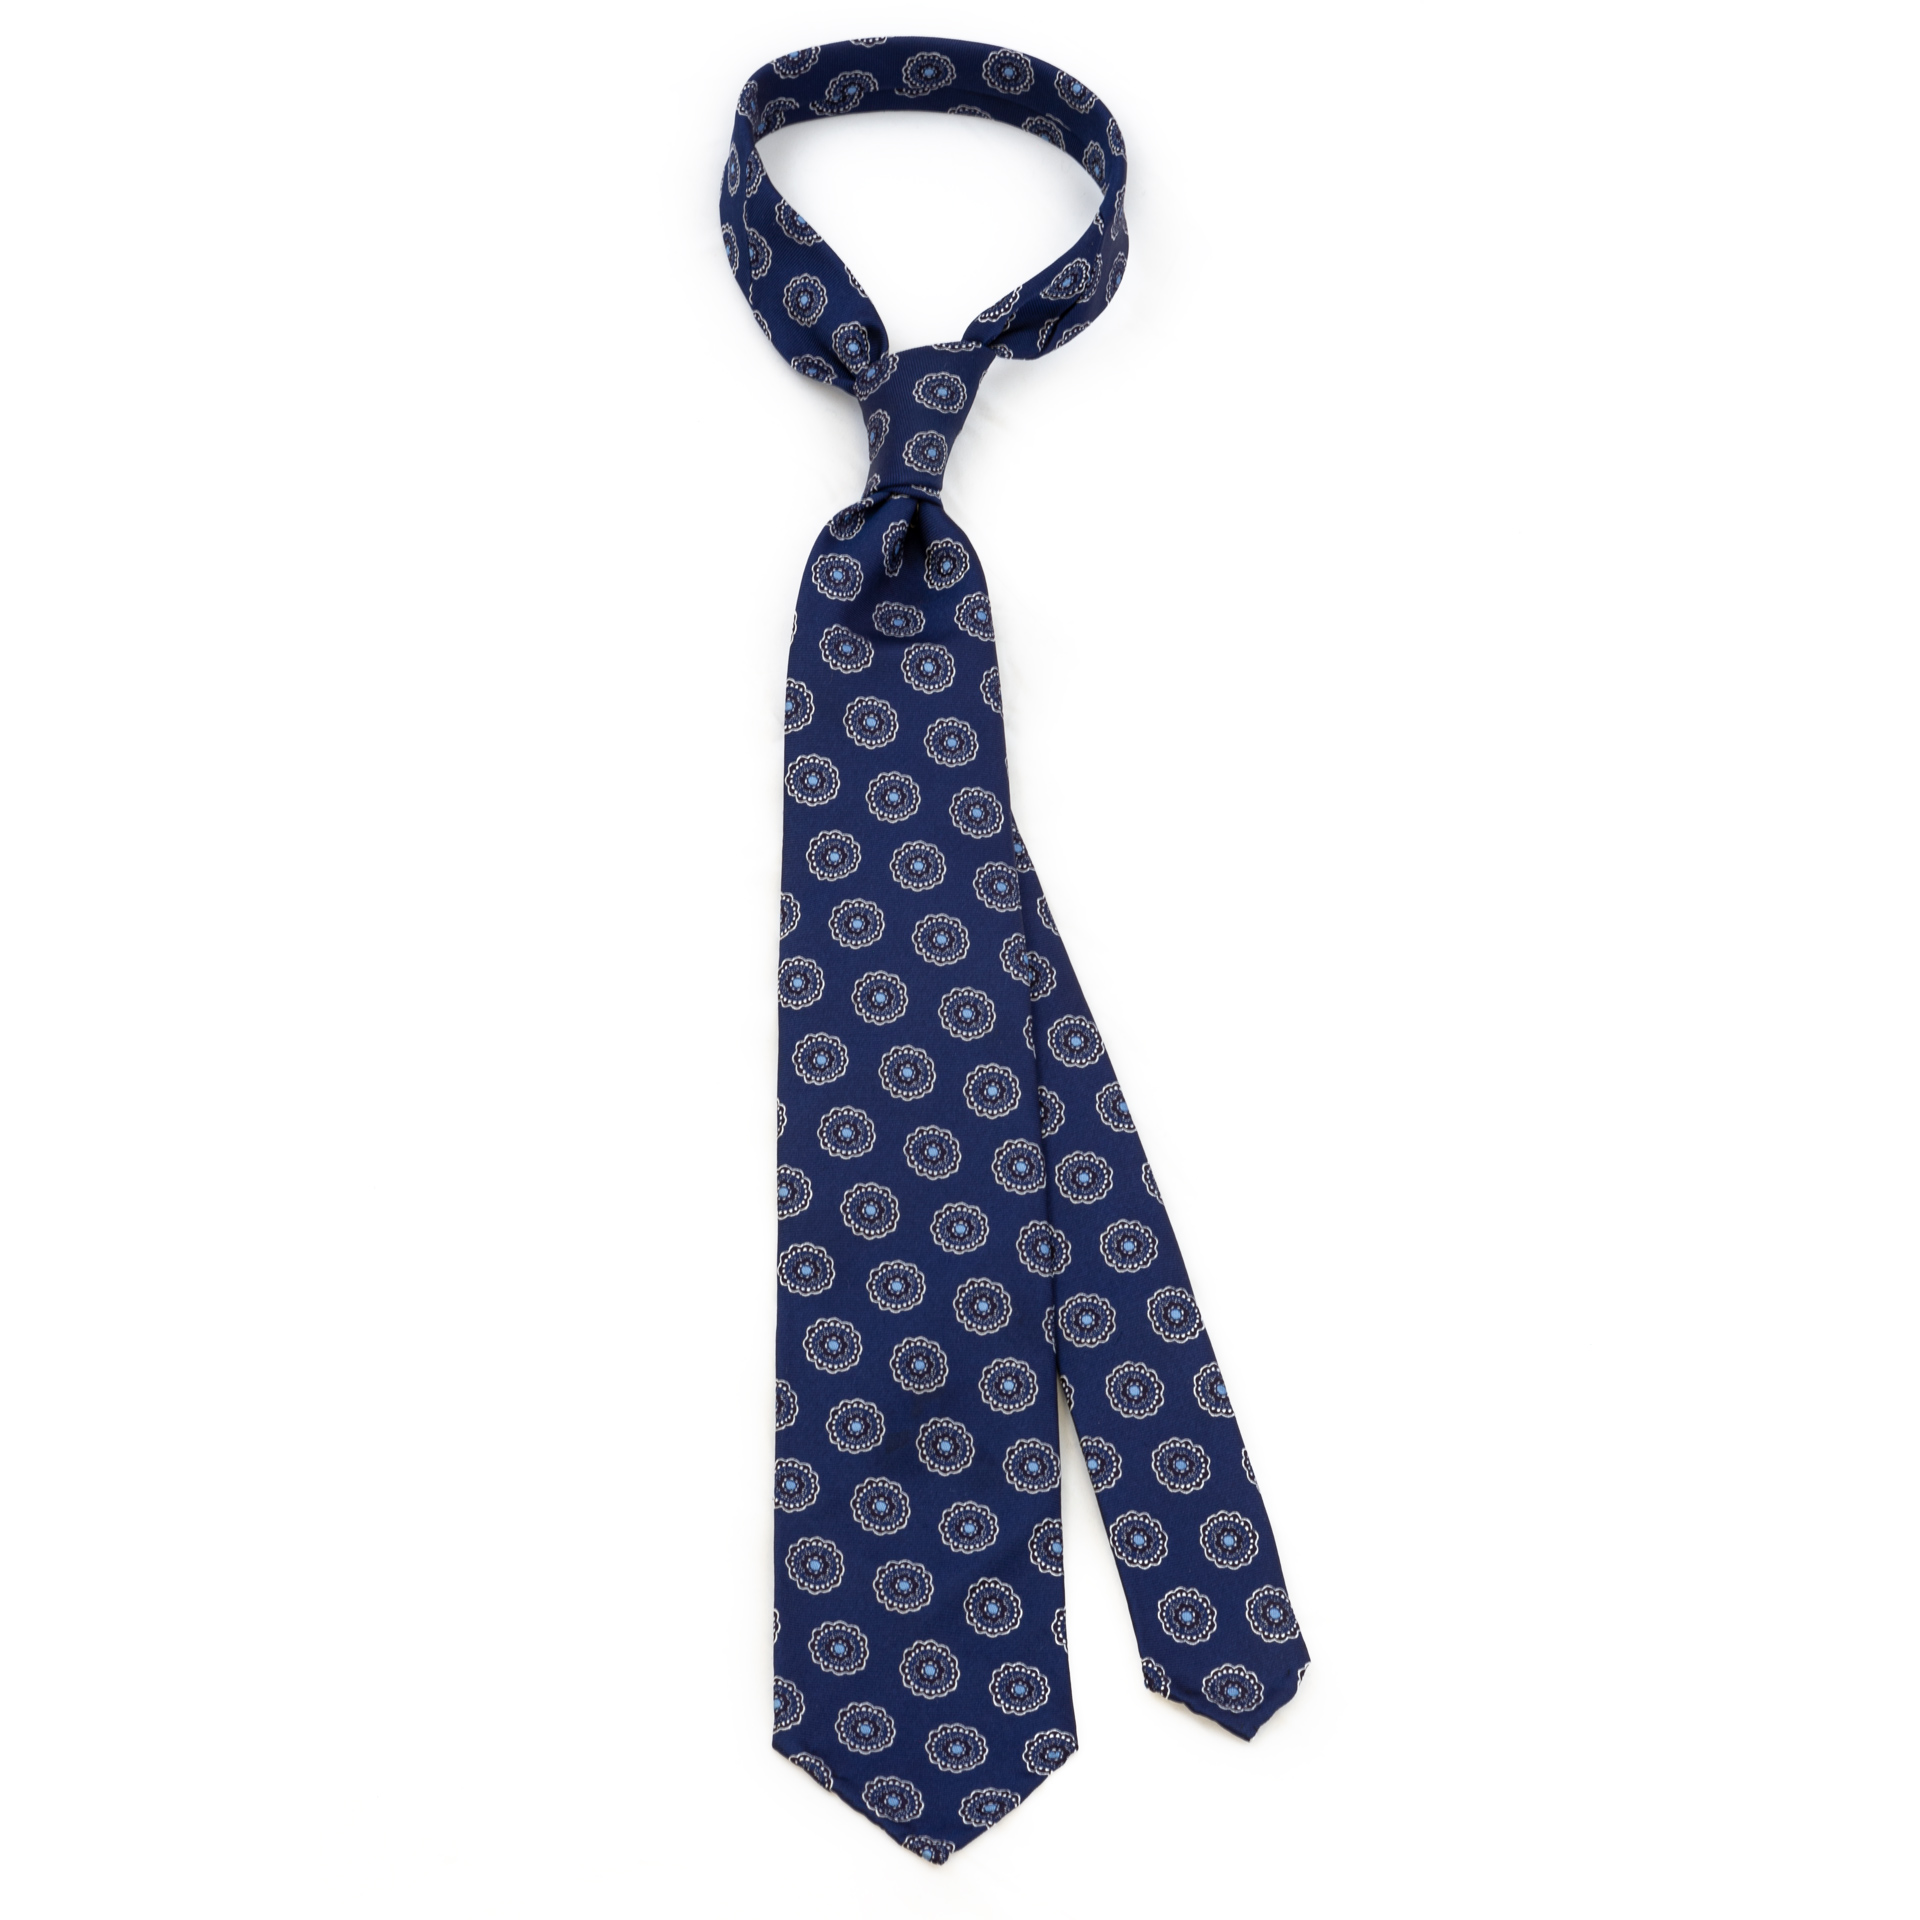 Blue 5-fold floral print silk tie